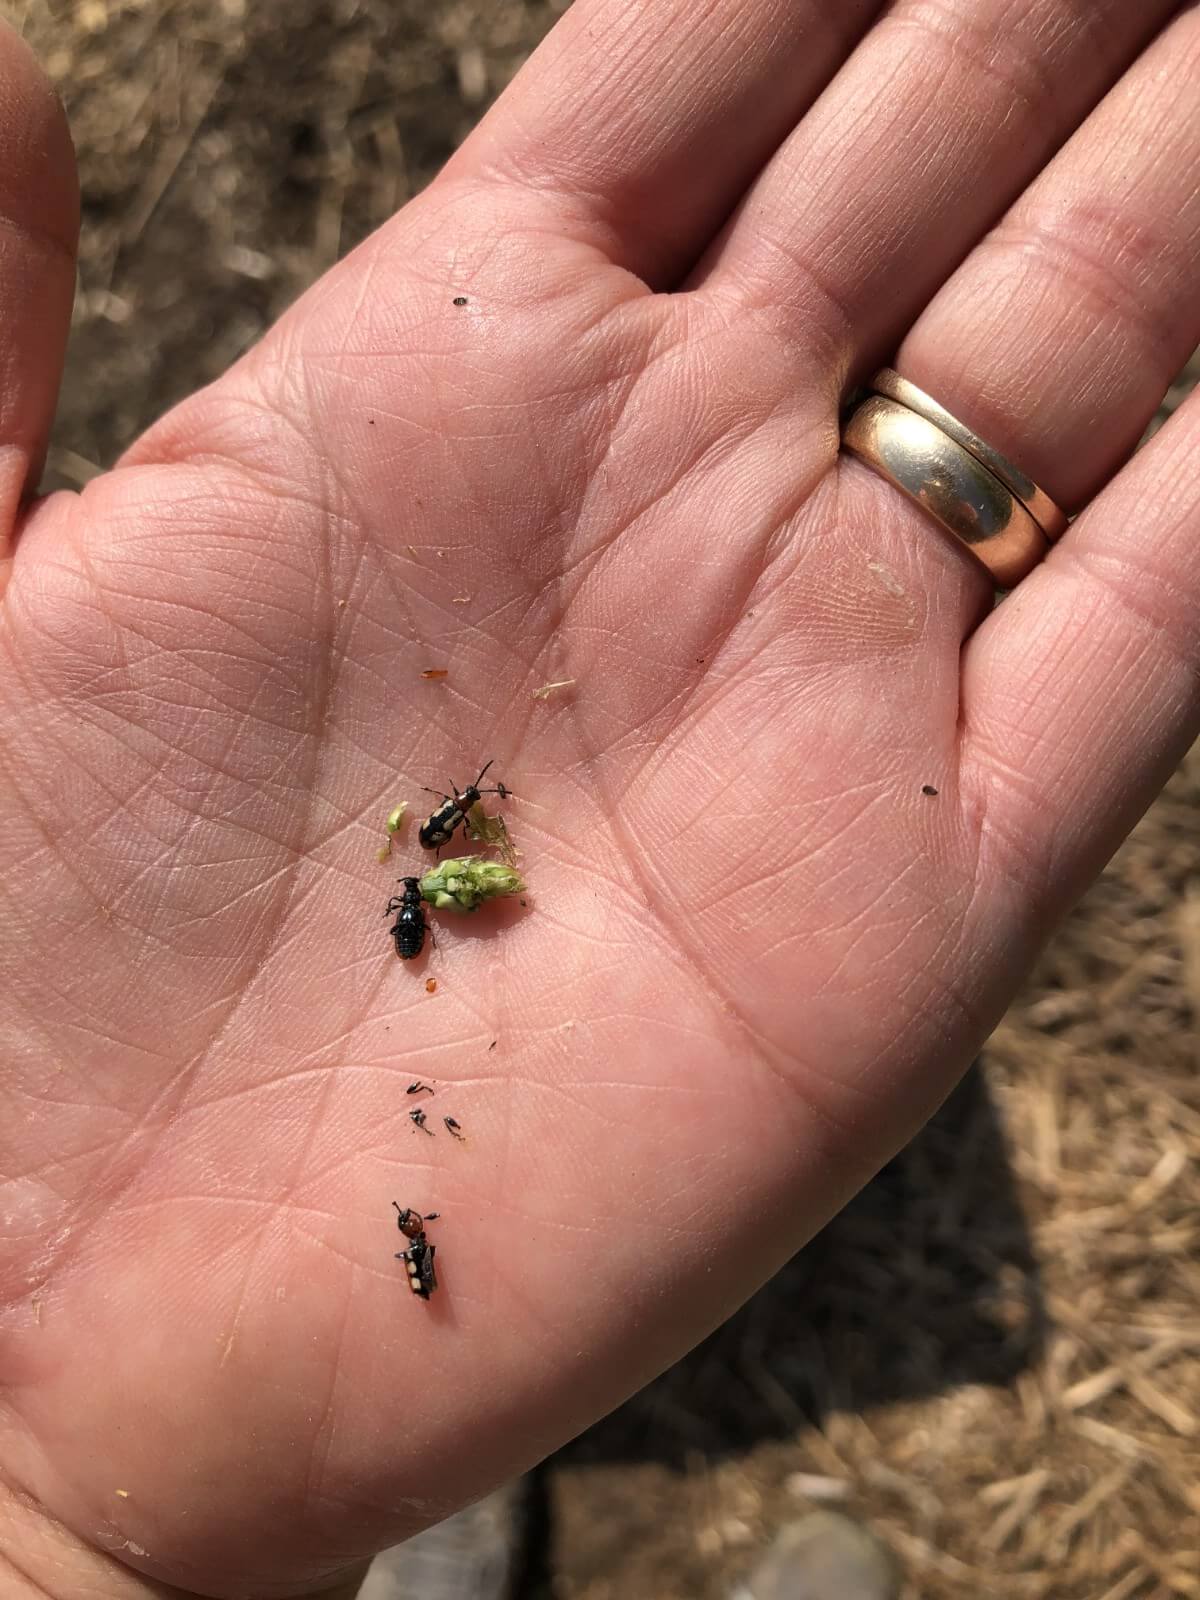 asparagus beetles in hand